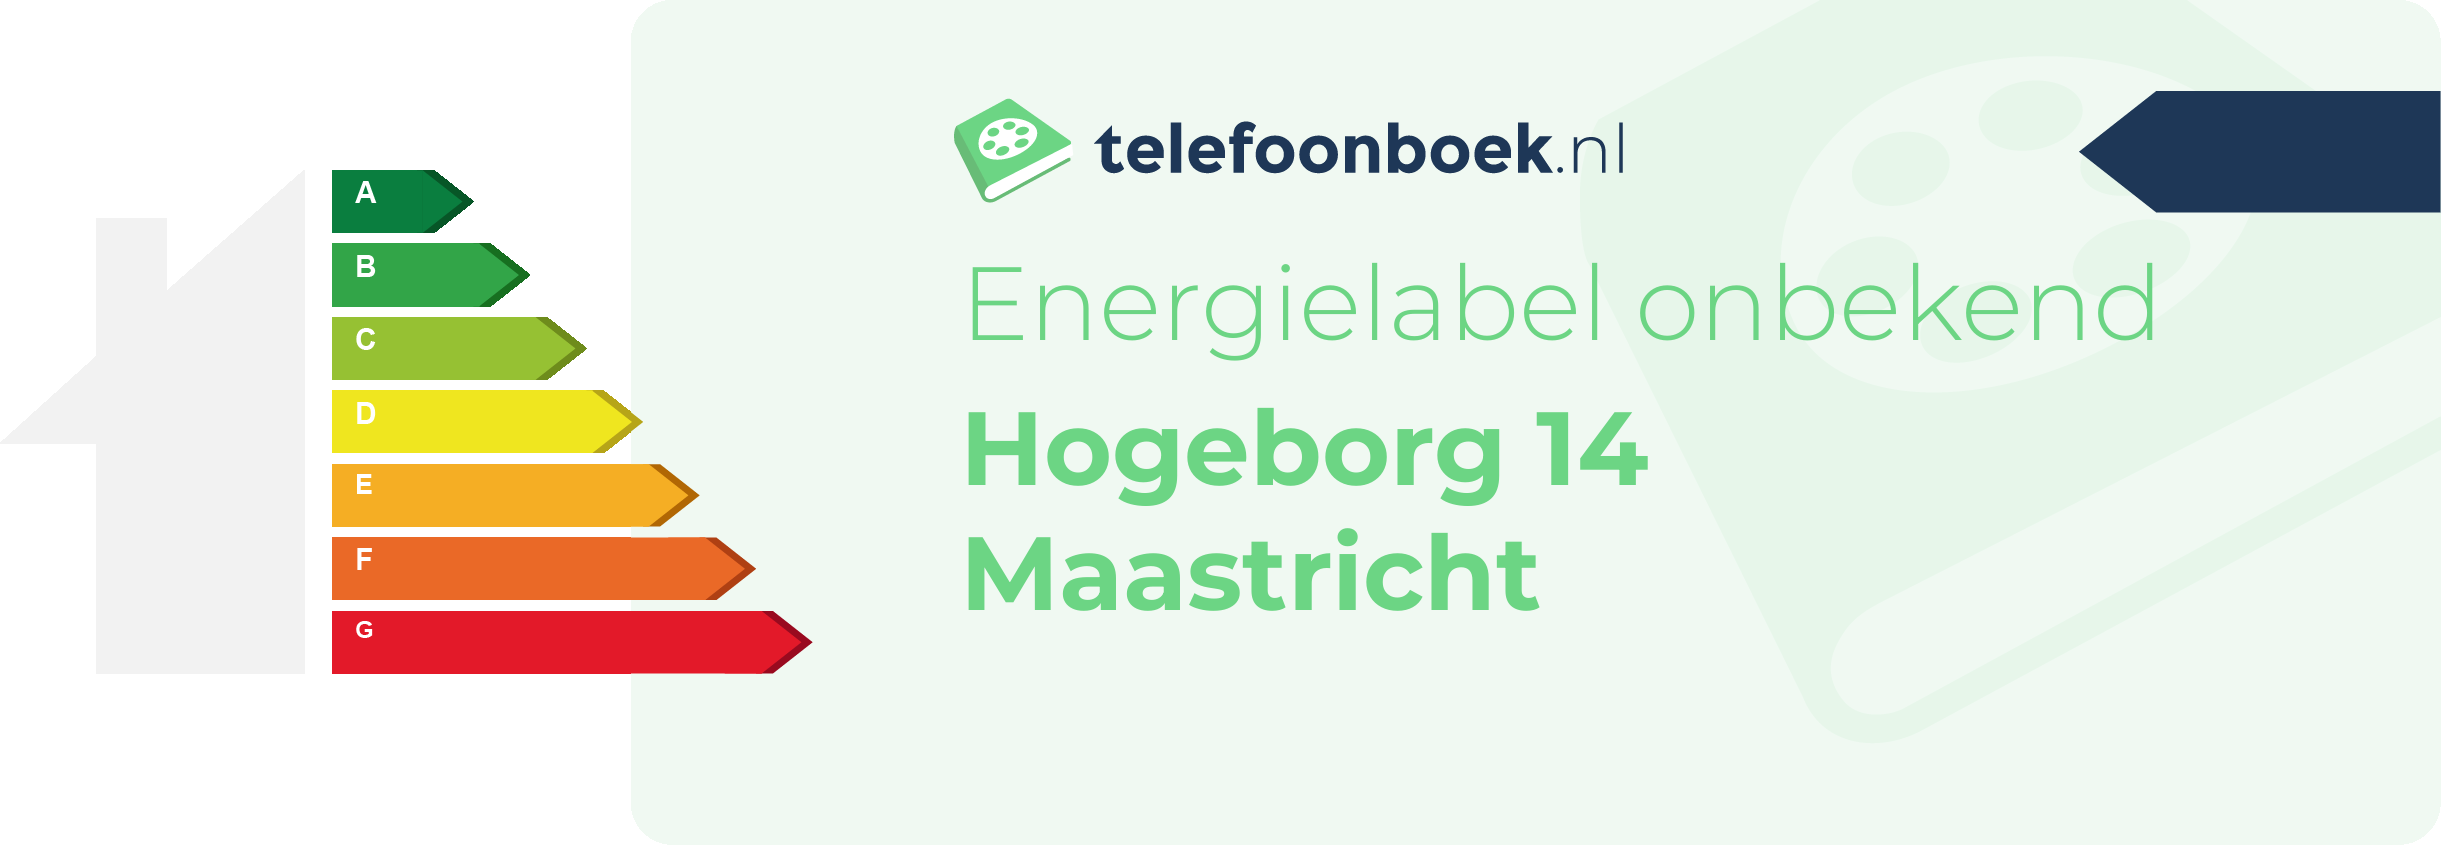 Energielabel Hogeborg 14 Maastricht